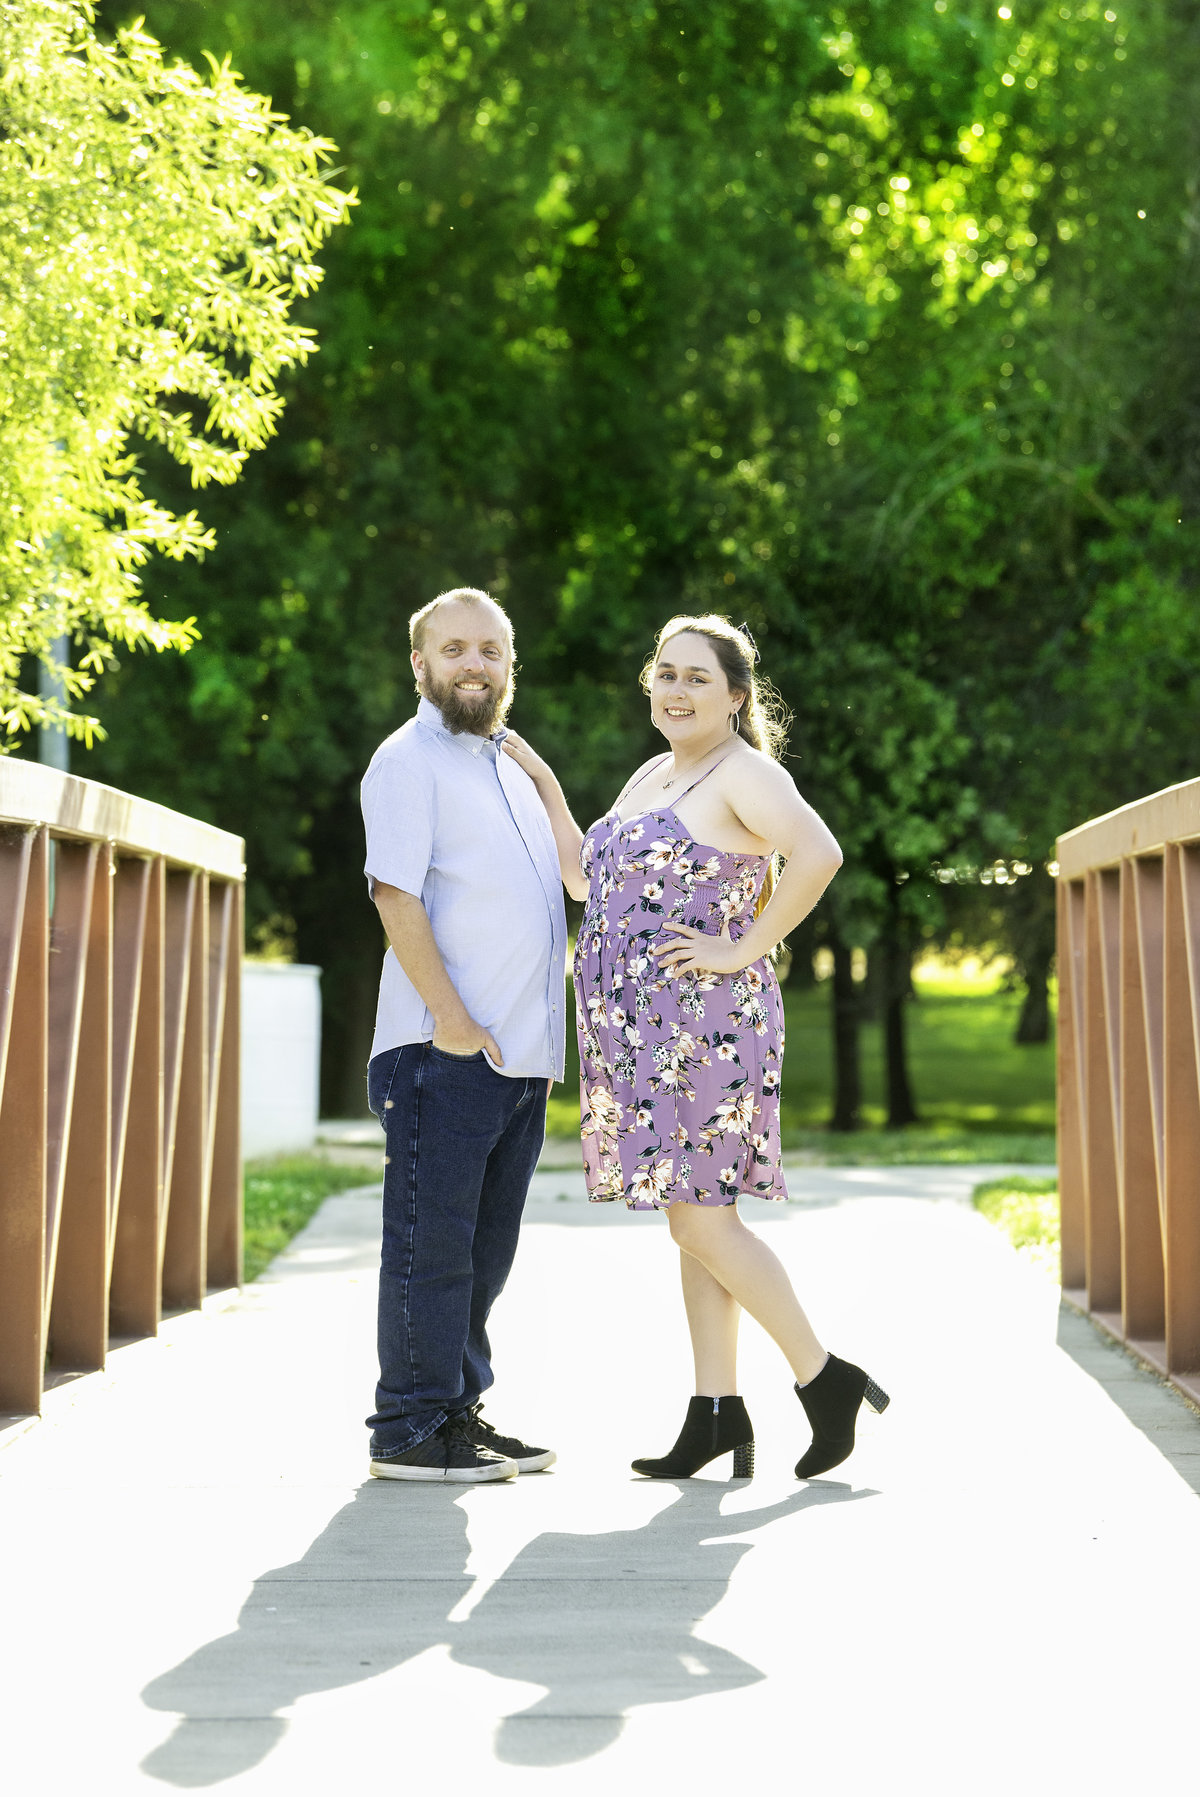 Michael & Marissa - Engagement Session - Micke Grove park in Lodi CA - 2019 (18)